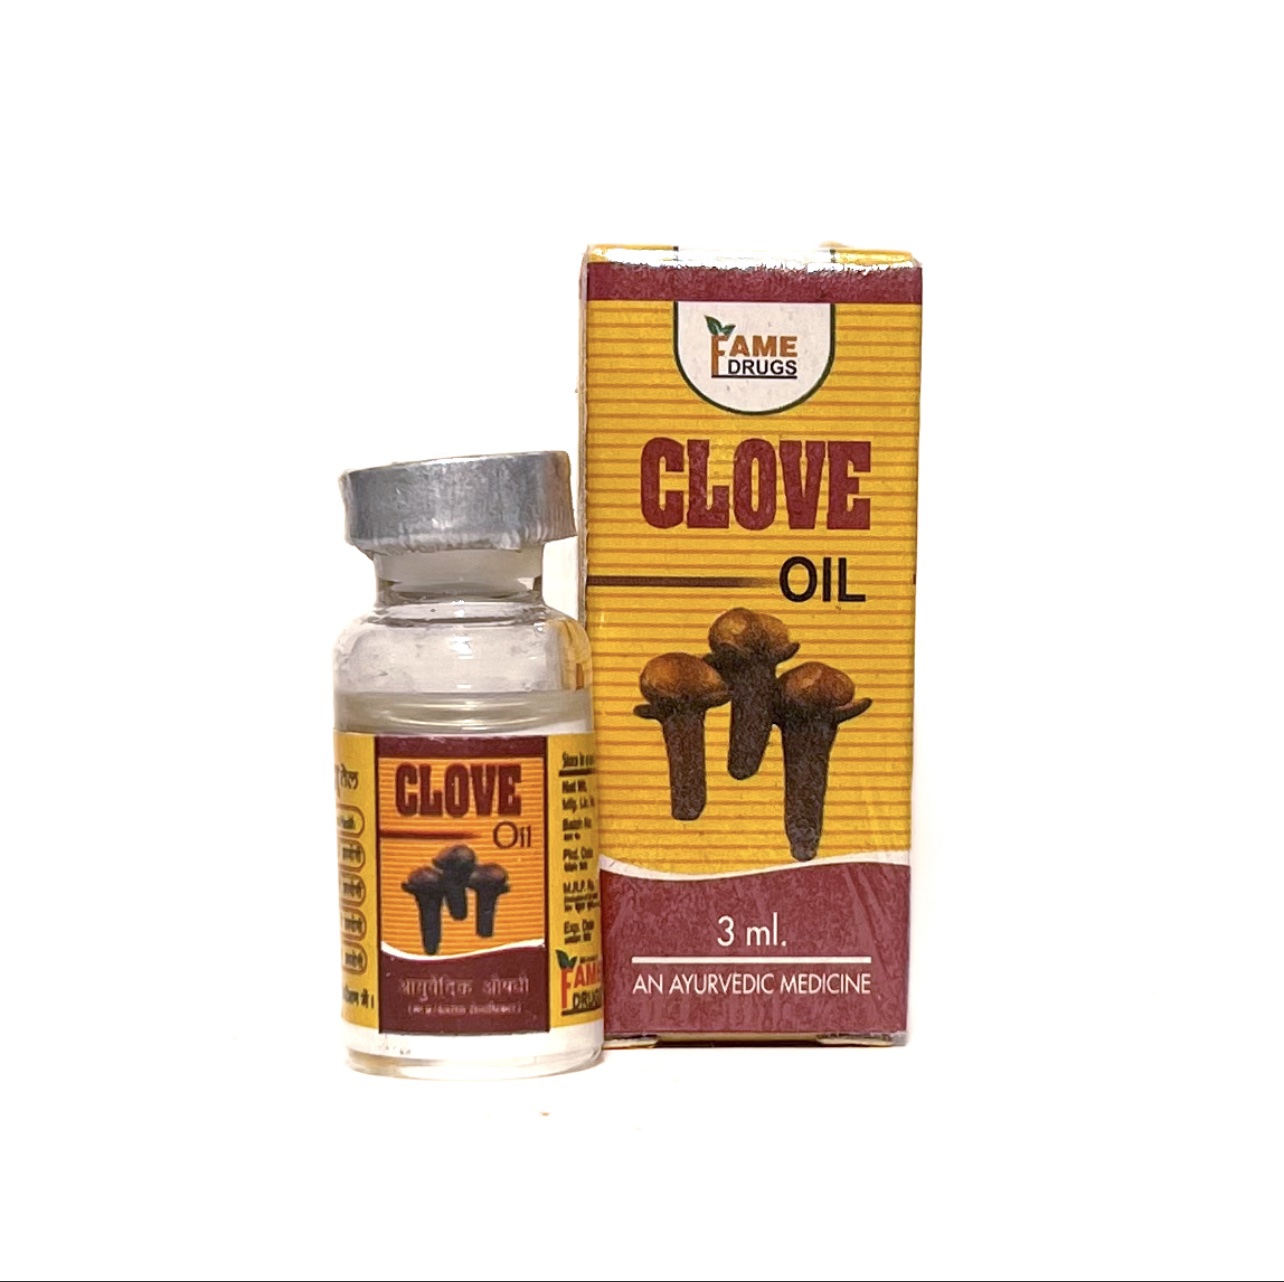 CLOVE OIL, Fame Drugs (Аюрведическое МАСЛО ГВОЗДИКИ, Фейм Драгз), 3 мл.